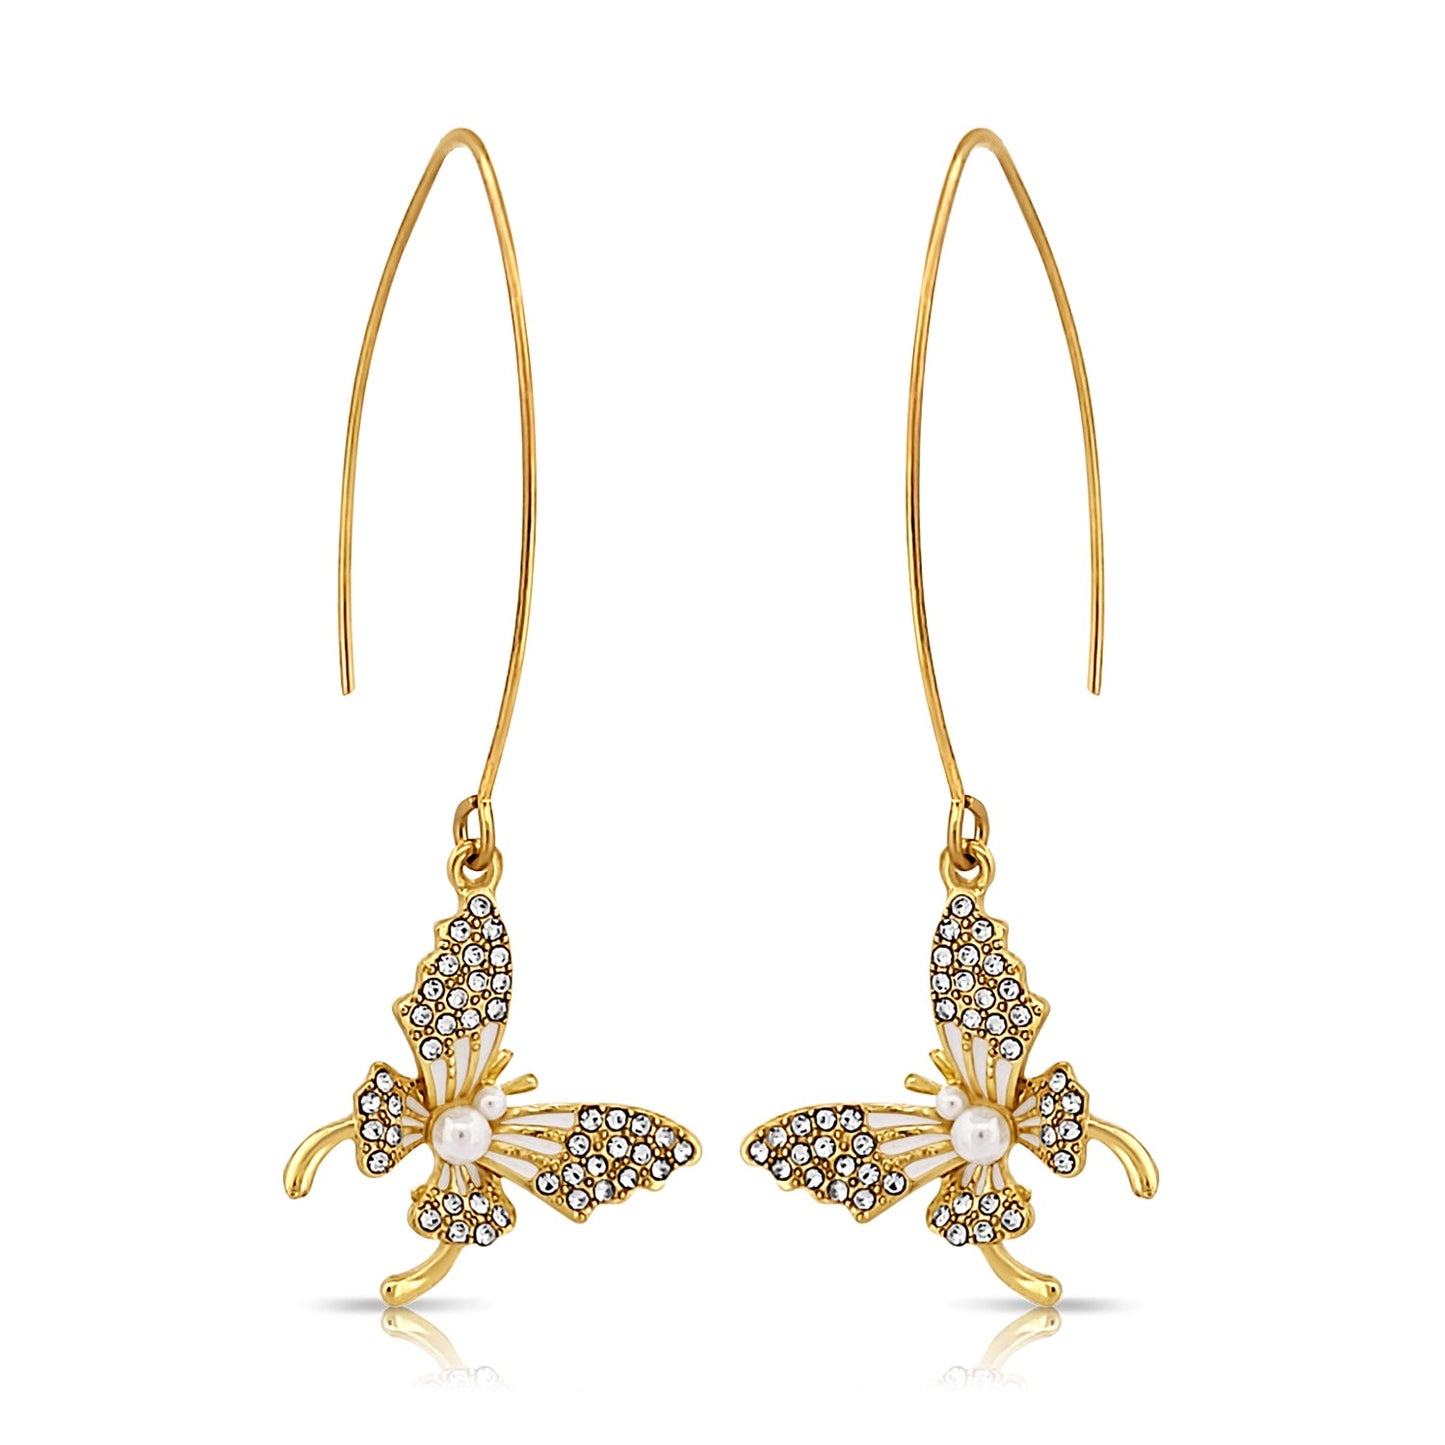 BESHEEK Goldtone and Rhinestones Faux Pearl Butterfly Fish Hook Earrings | Handmade Hypoallergenic Boho Beach Gala Wedding Style Fashion Earrings